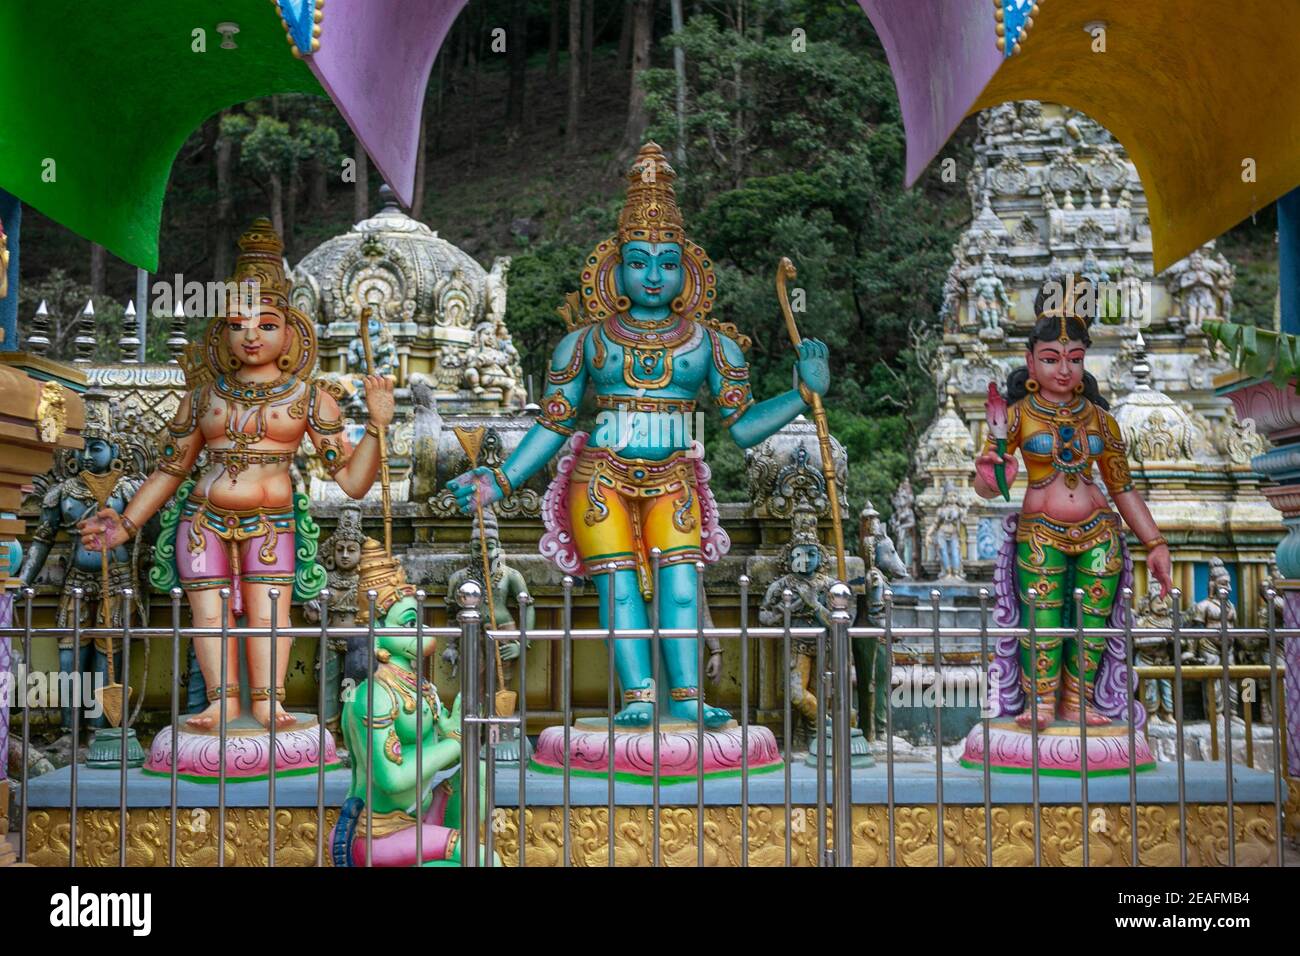 The statue of Hindu God Rama with his wife and Hanuman in Sri Lanka. Stock Photo